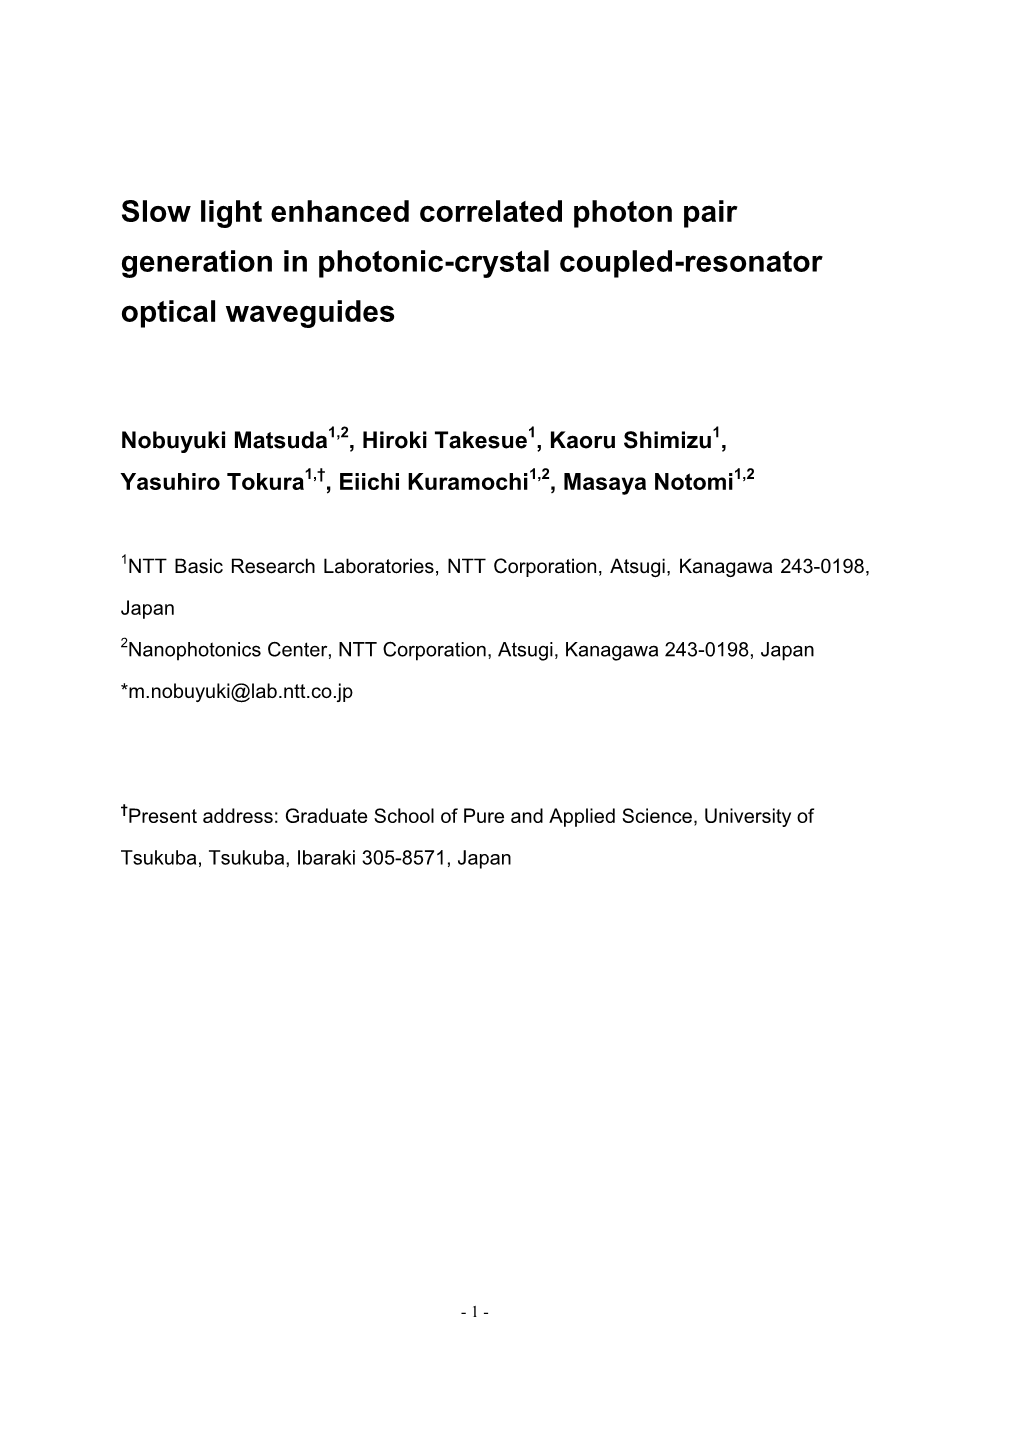 Slow Light Enhanced Correlated Photon Pair Generation in Photonic-Crystal Coupled-Resonator Optical Waveguides